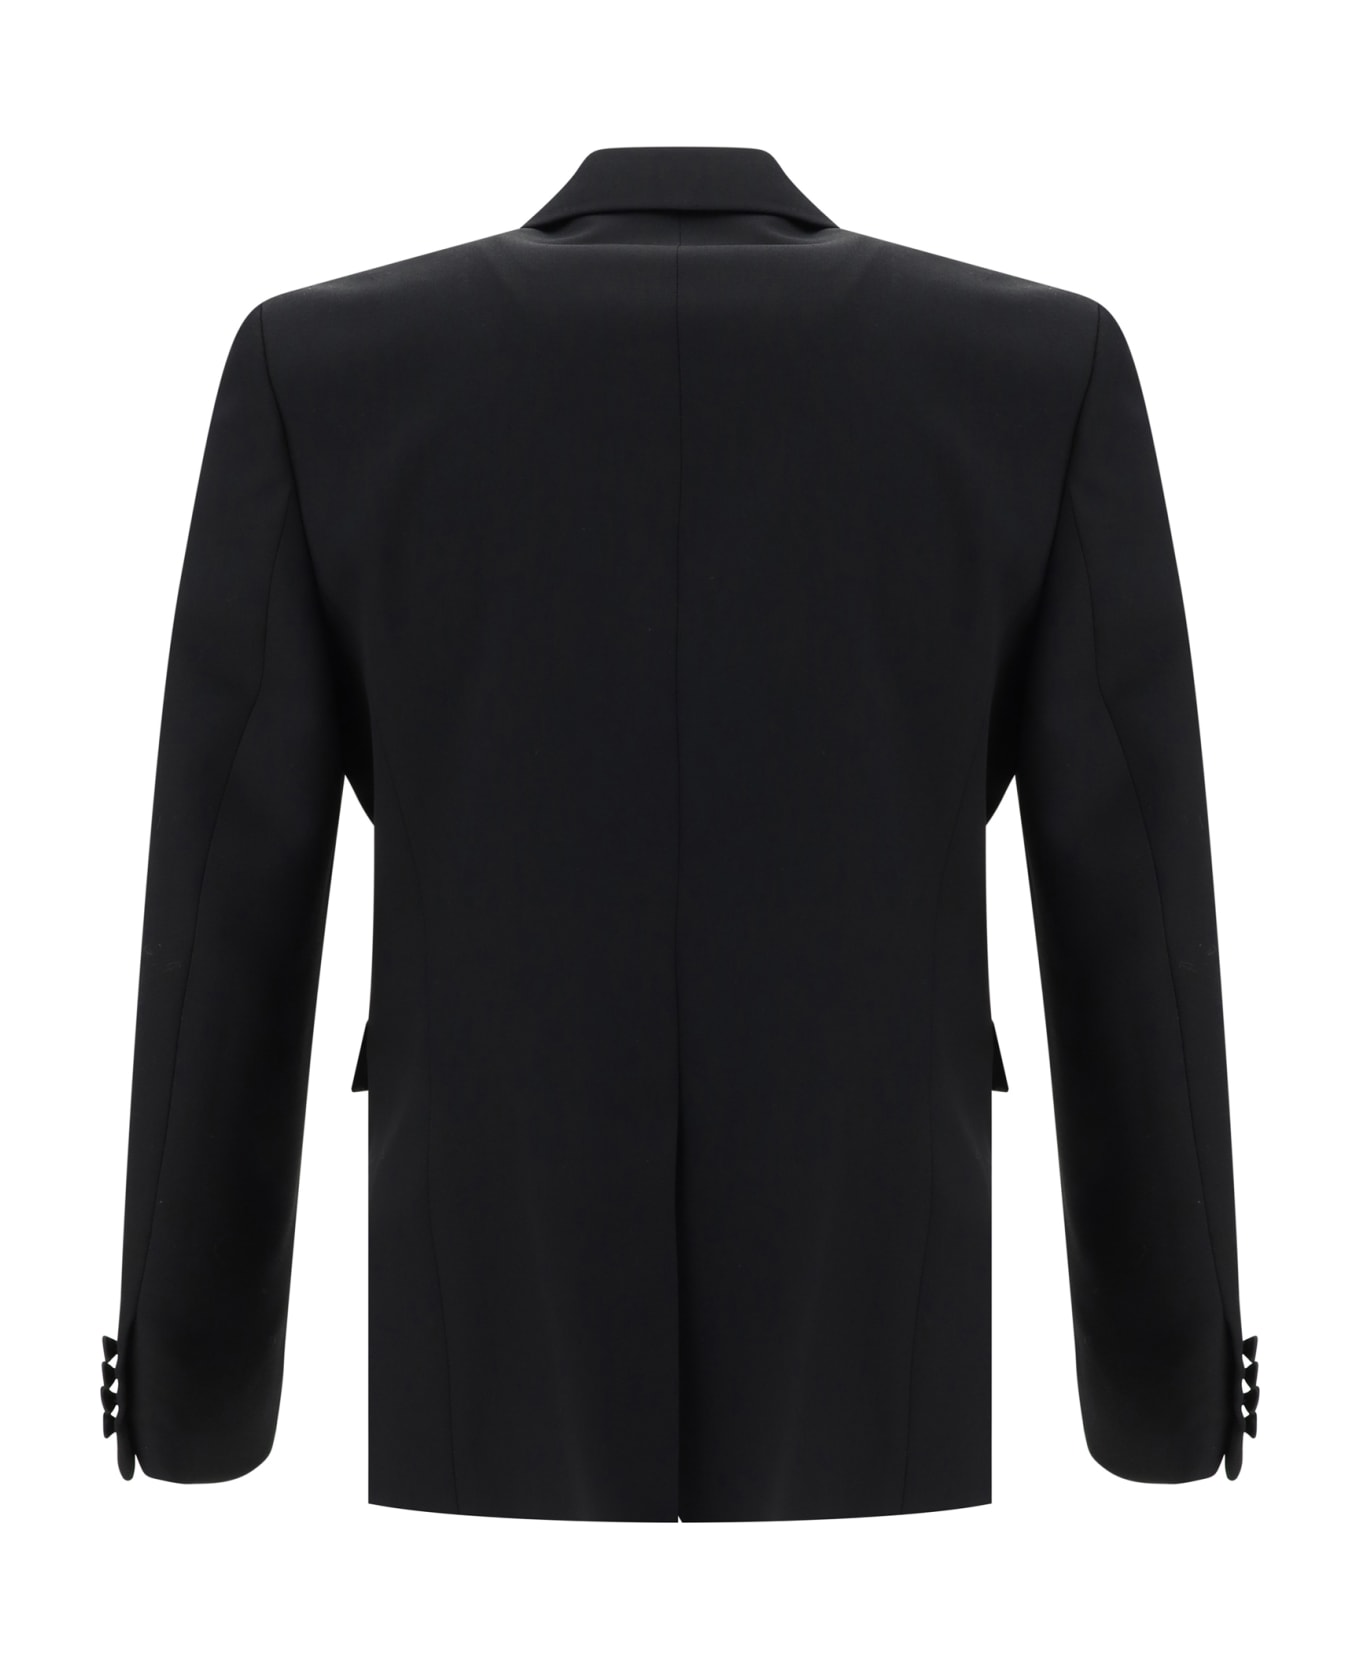 Saint Laurent Blazer Jacket - Black